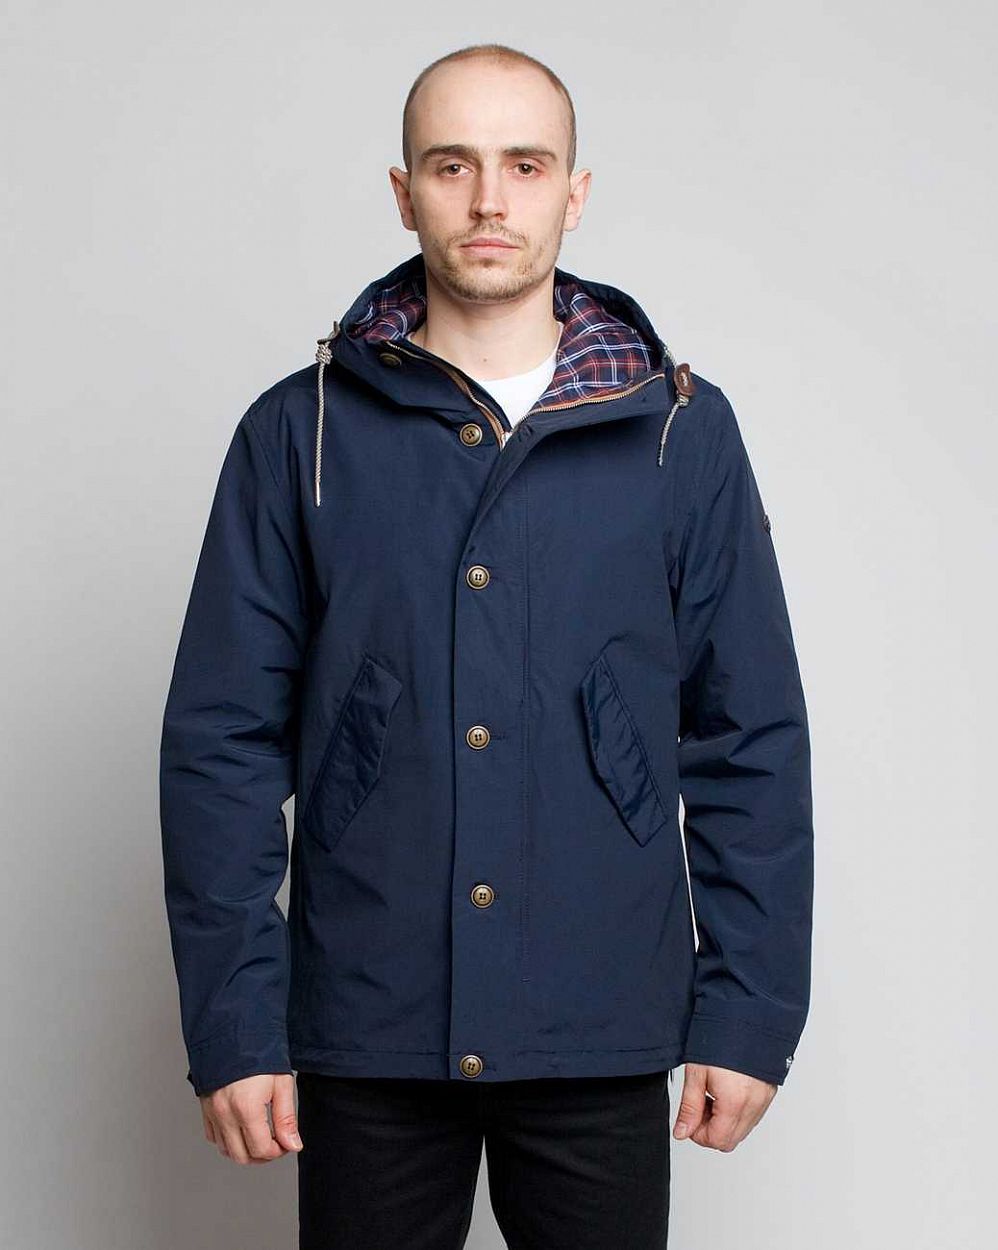 Куртка-Парка Loading Garments Supply Jacket navy 1224 отзывы